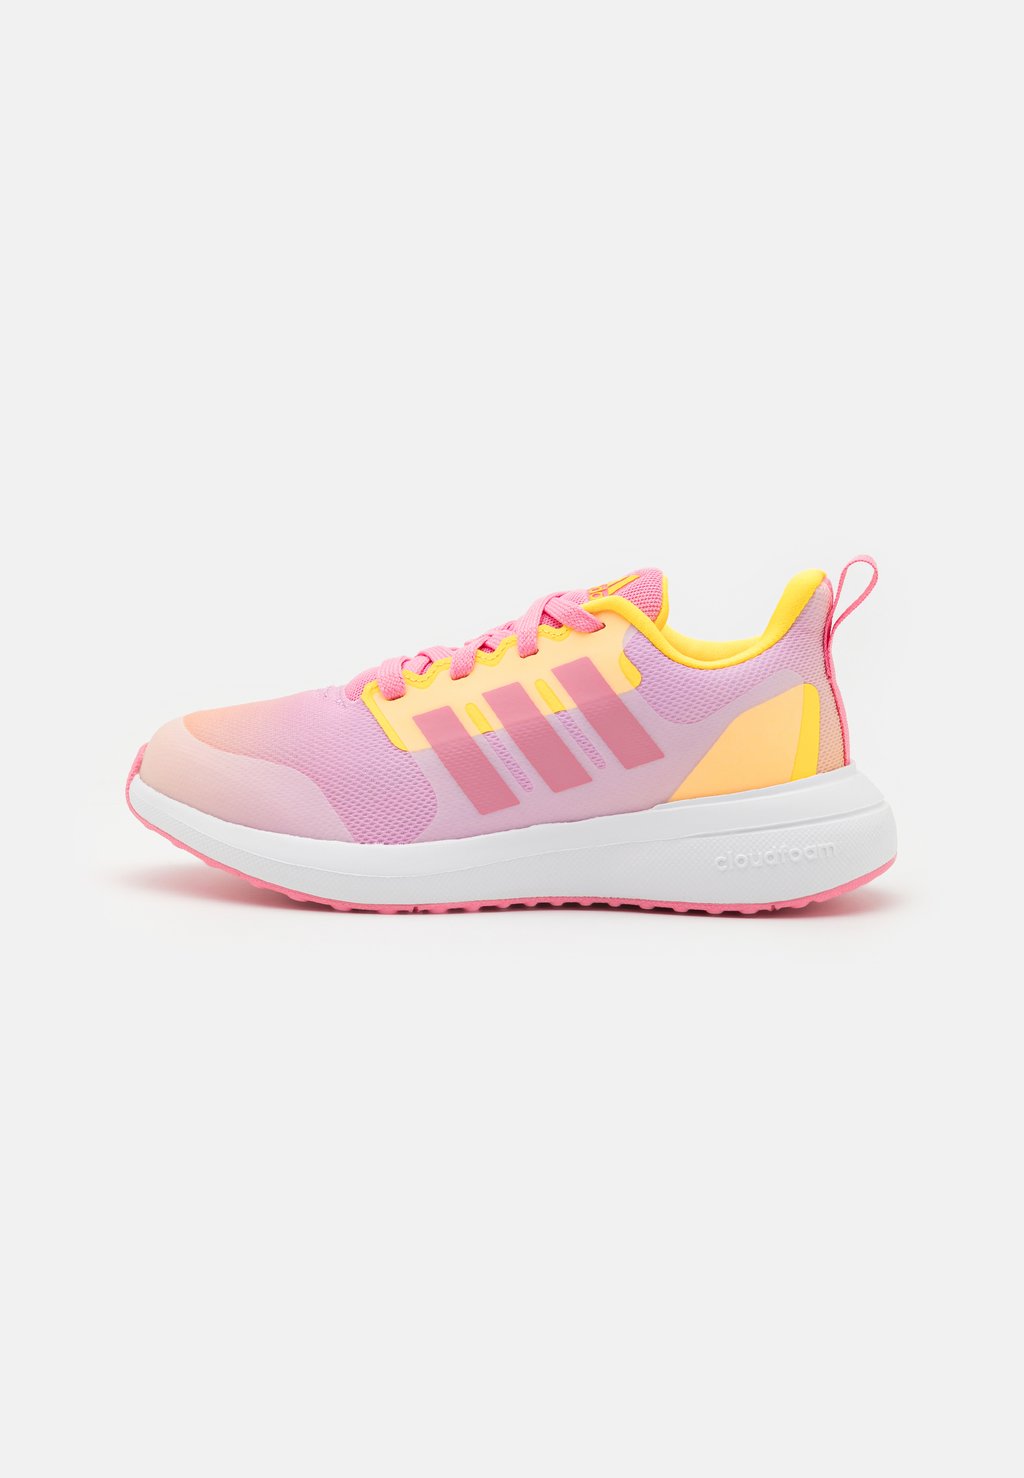 Кроссовки для соревнований FORTARUN 2.0 UNISEX adidas Performance, цвет spark/bliss pink/bliss lilac bliss